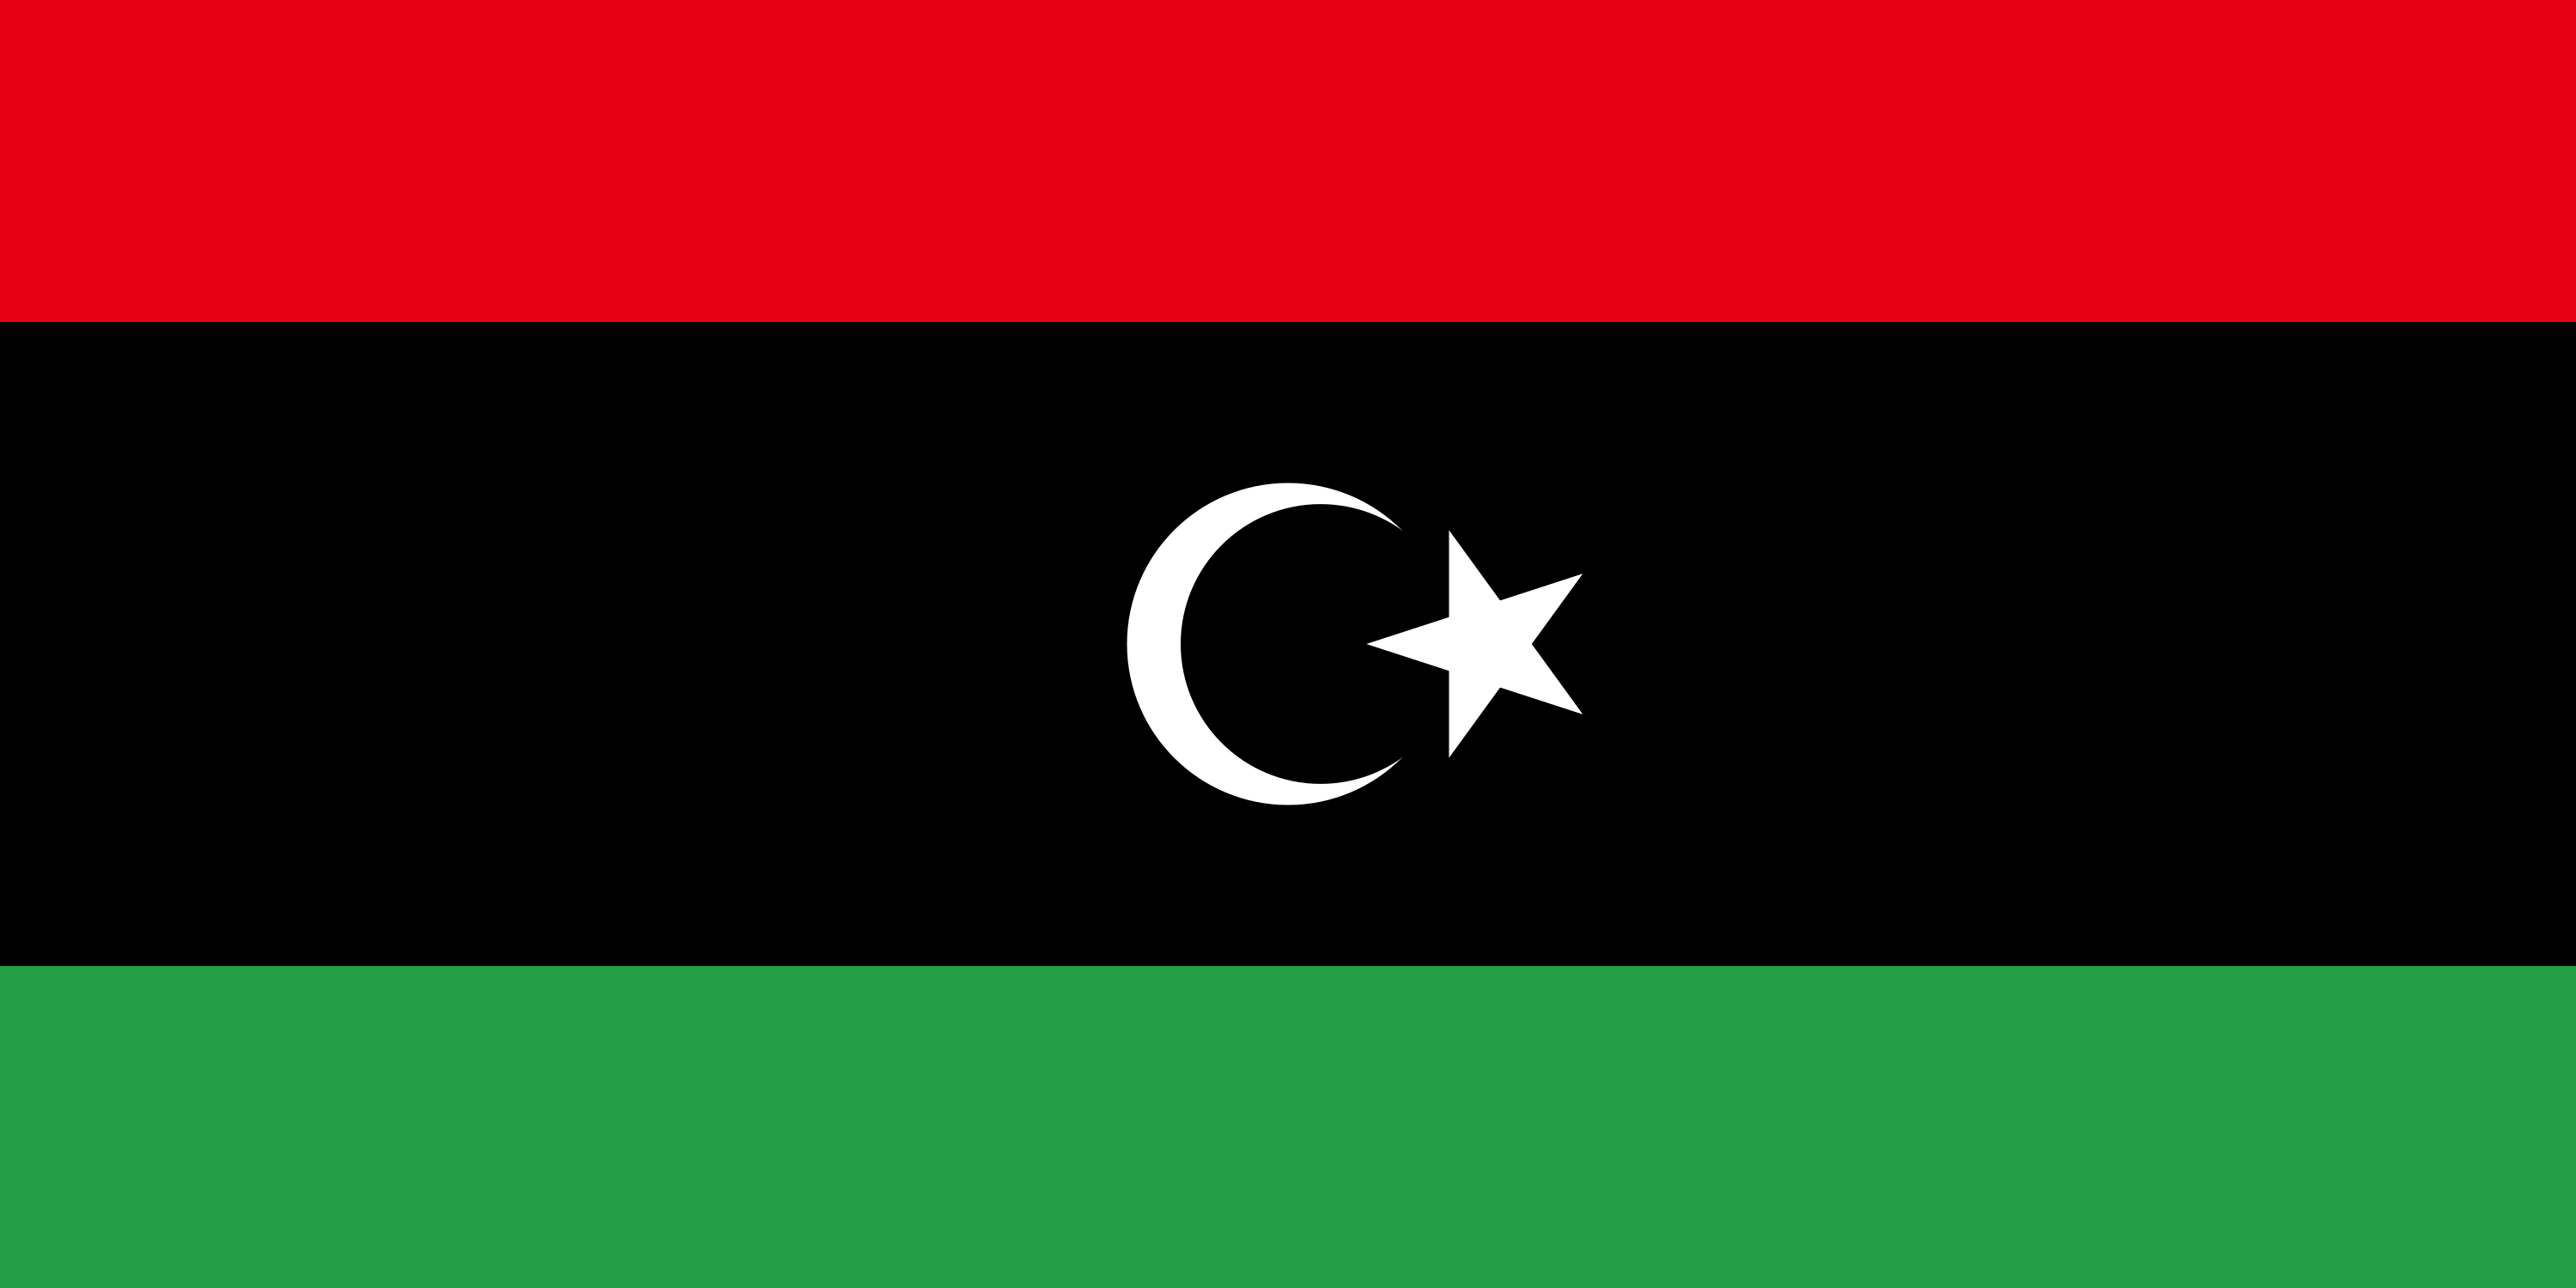 Libya Flag Image - Free Download